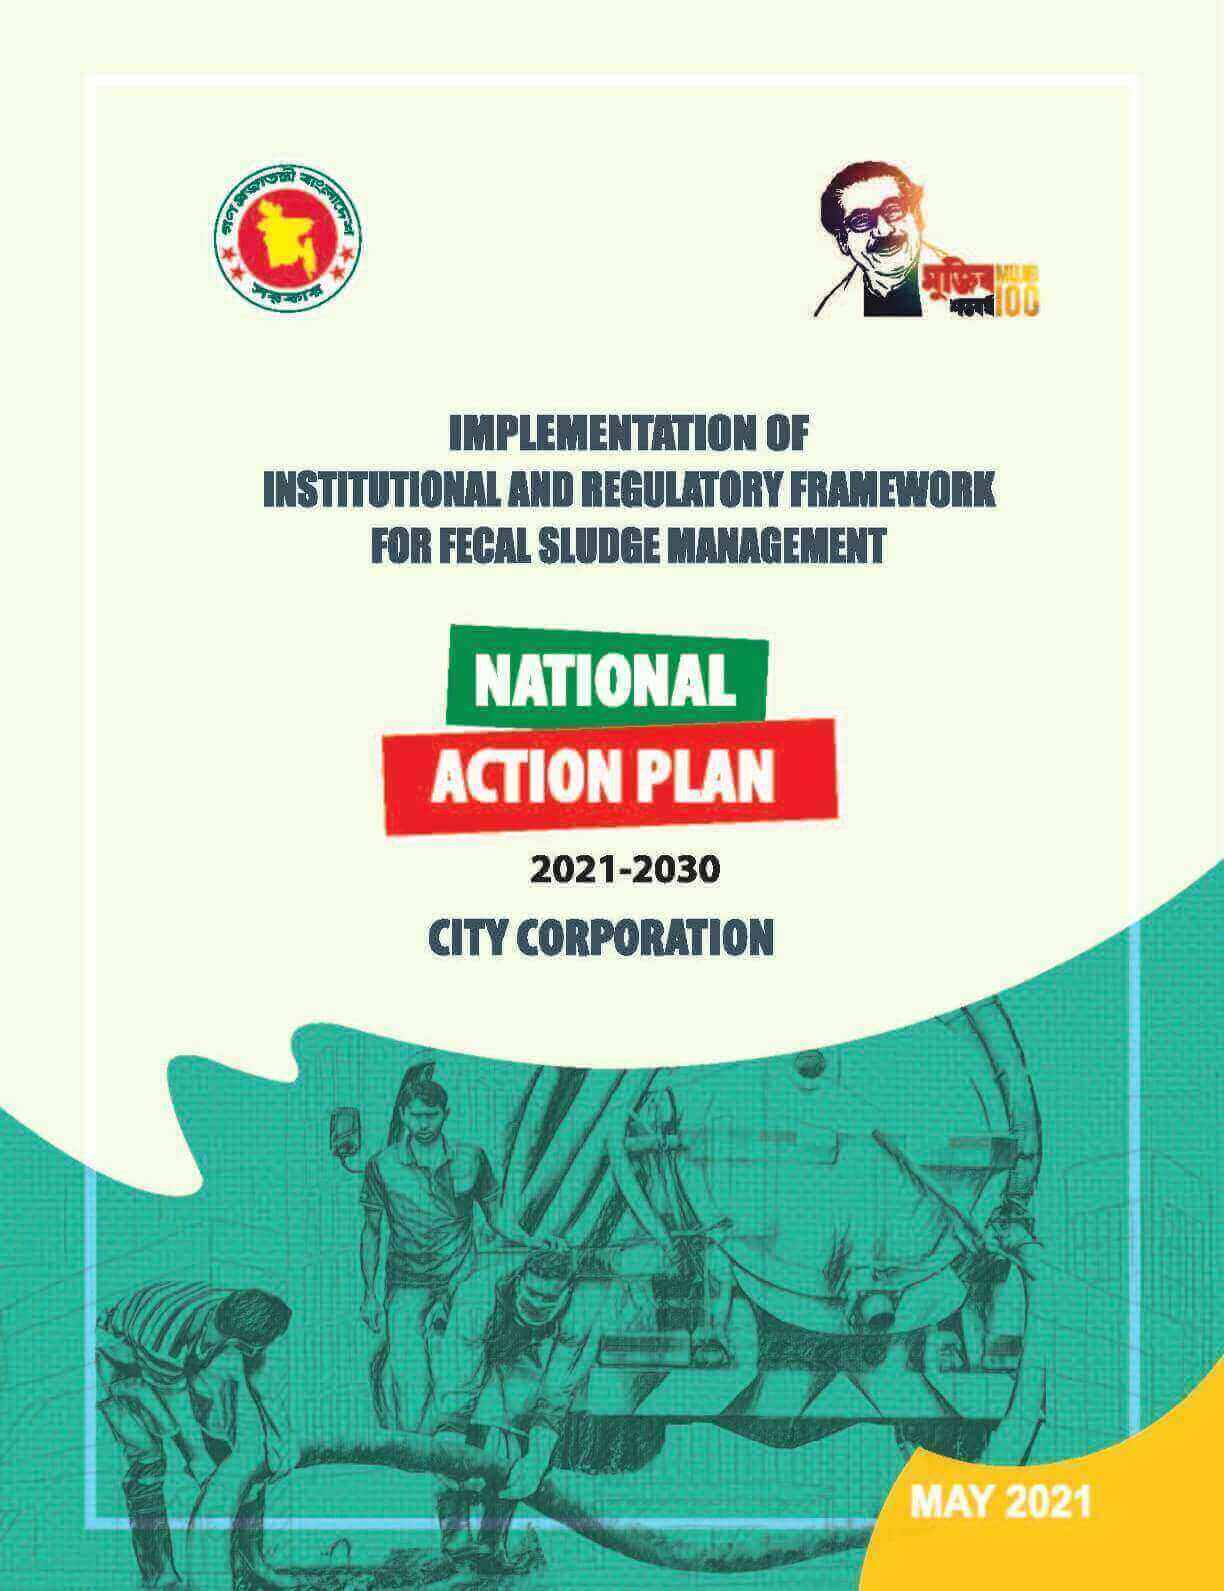 National Action Plan for Implementation of Institutional and Regulatory Framework (IRF) for Fecal Sludge Management for City Corporation